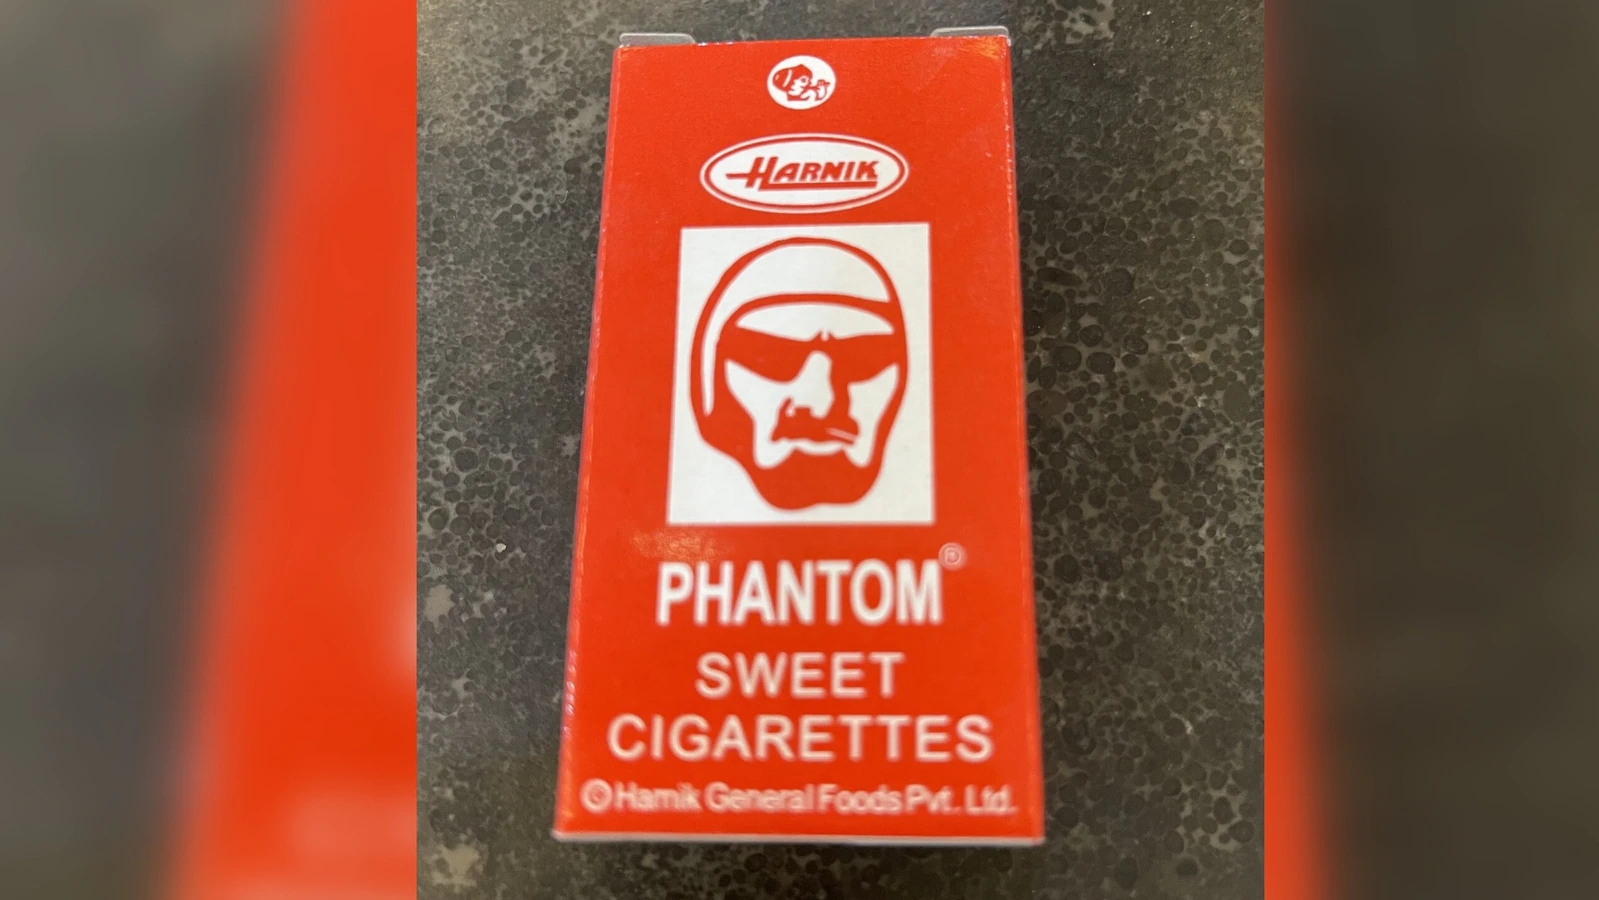 The Taste With Vir: Do you remember Phantom cigarettes?